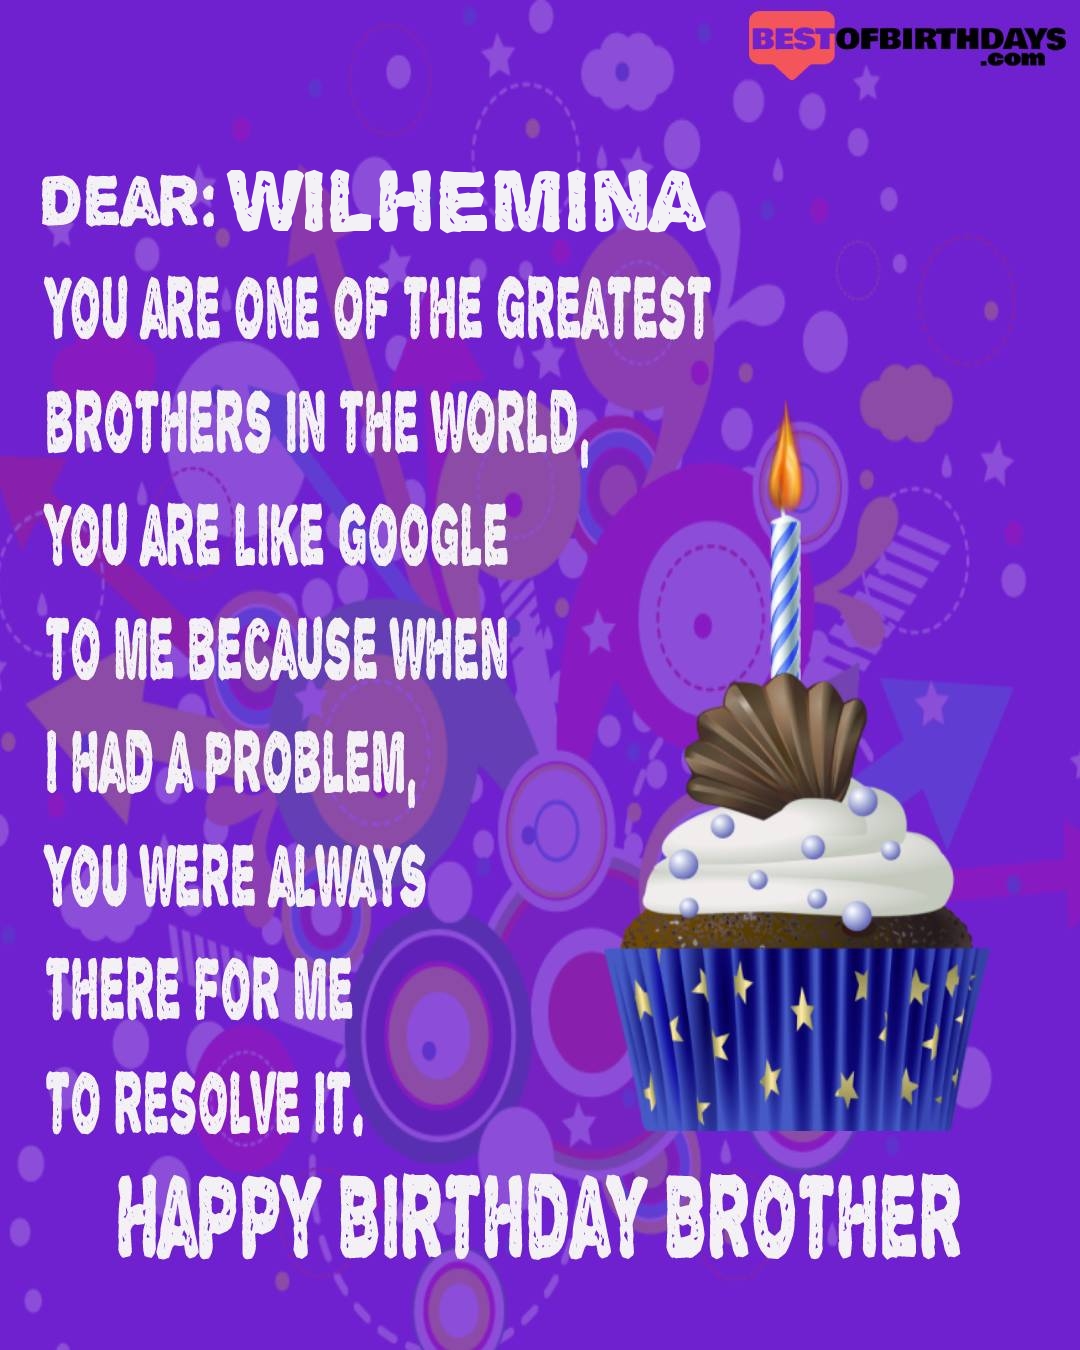 Happy birthday wilhemina bhai brother bro